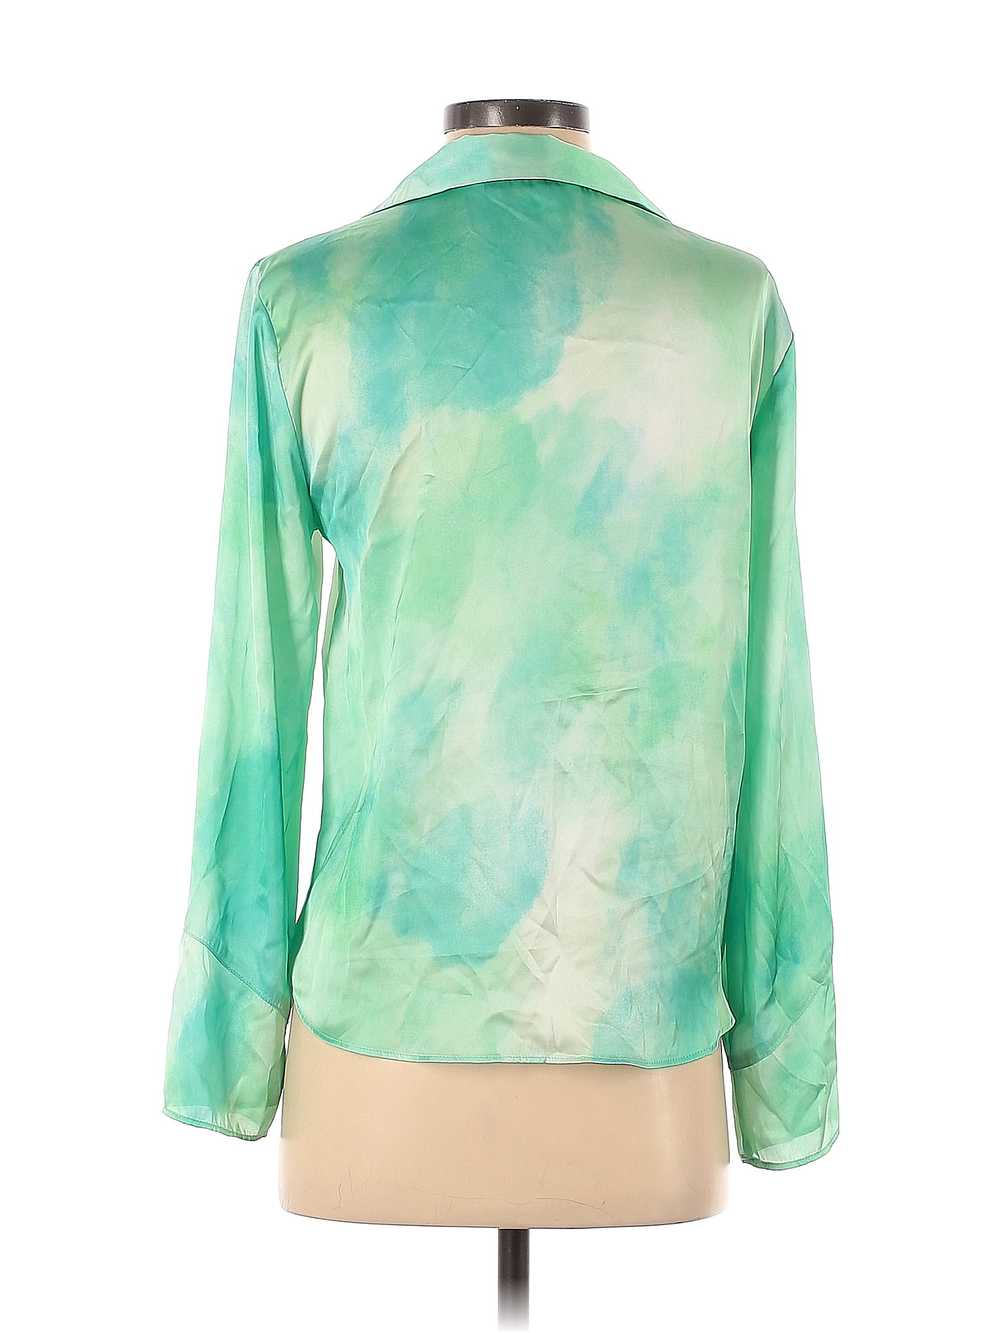 Zara Women Green Long Sleeve Blouse S - image 2